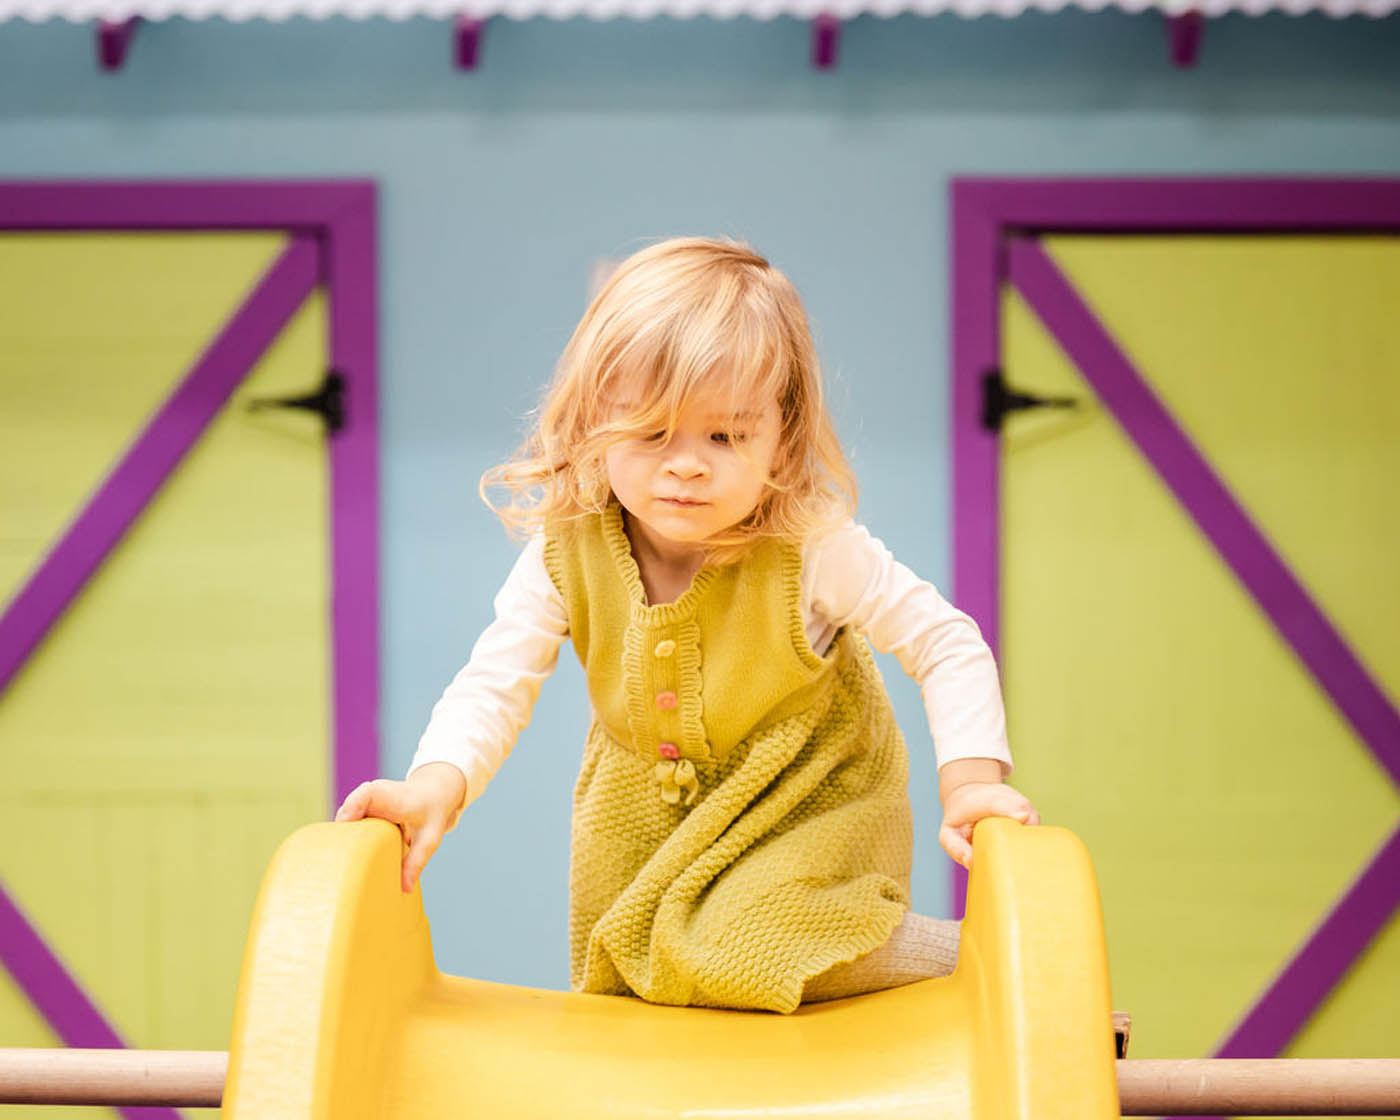 A girl climbing up a yellow slide enjoying open play in Pittsburgh, PA.